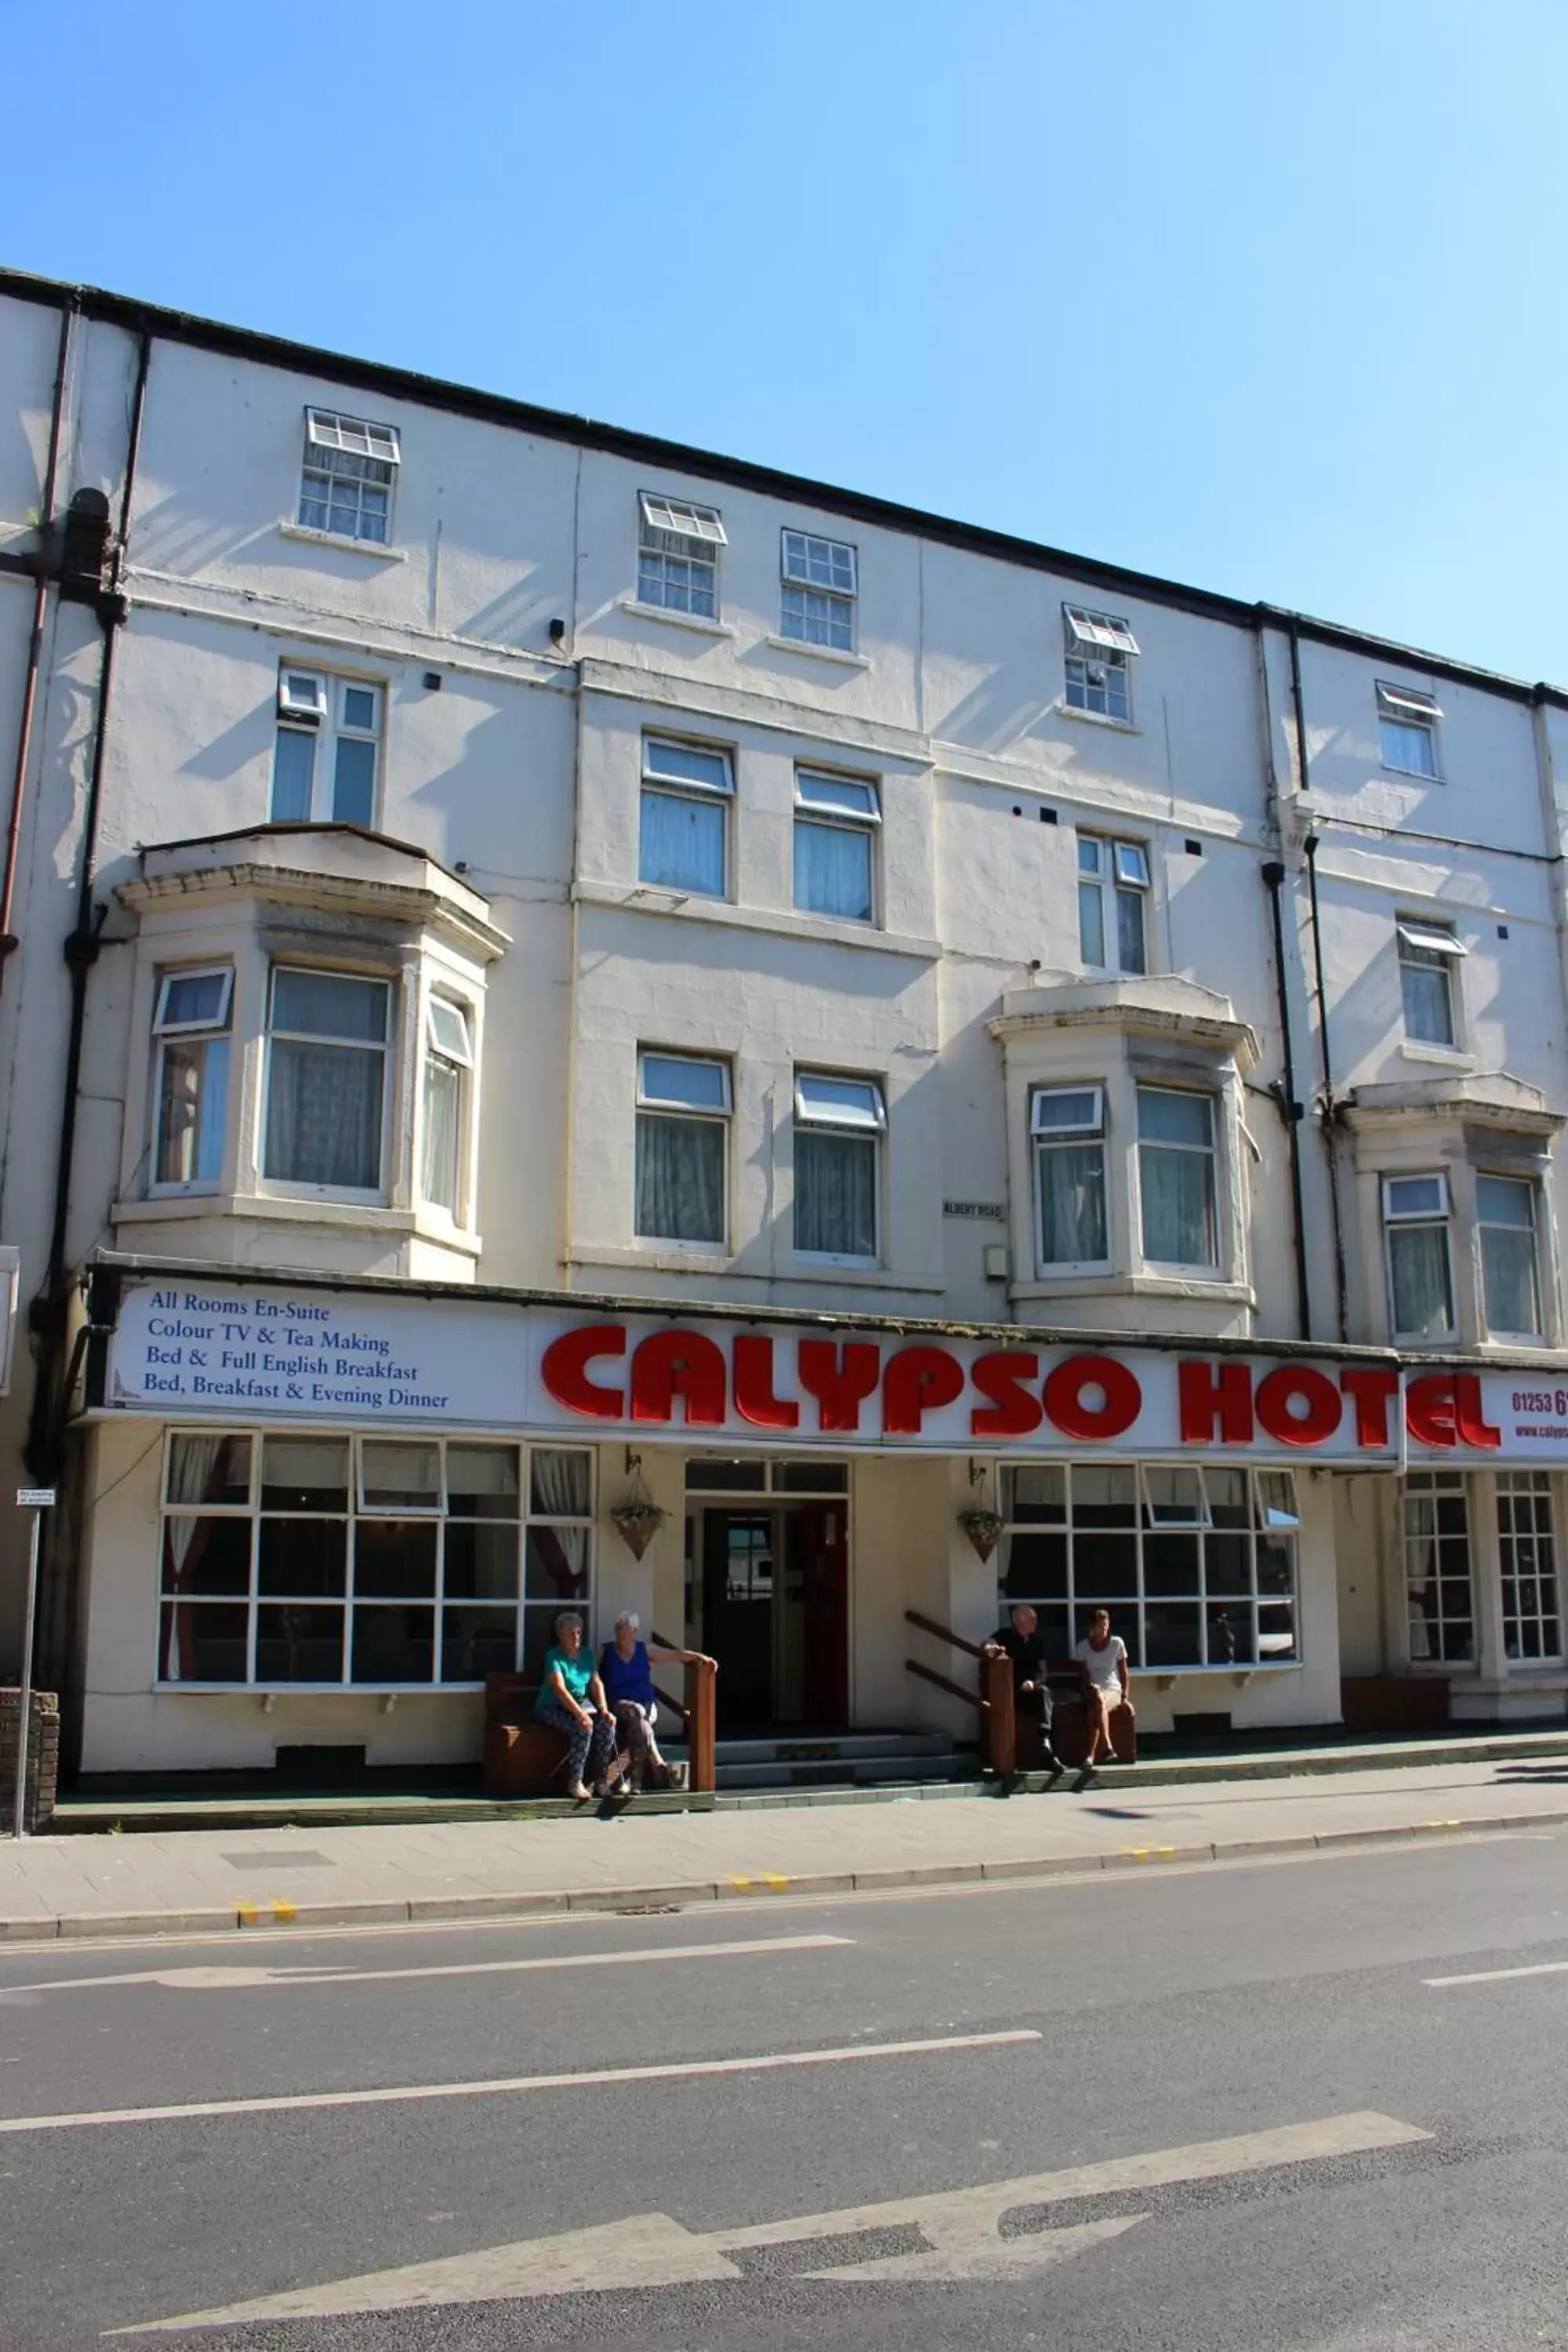 Property Building in Calypso hotel Blackpool